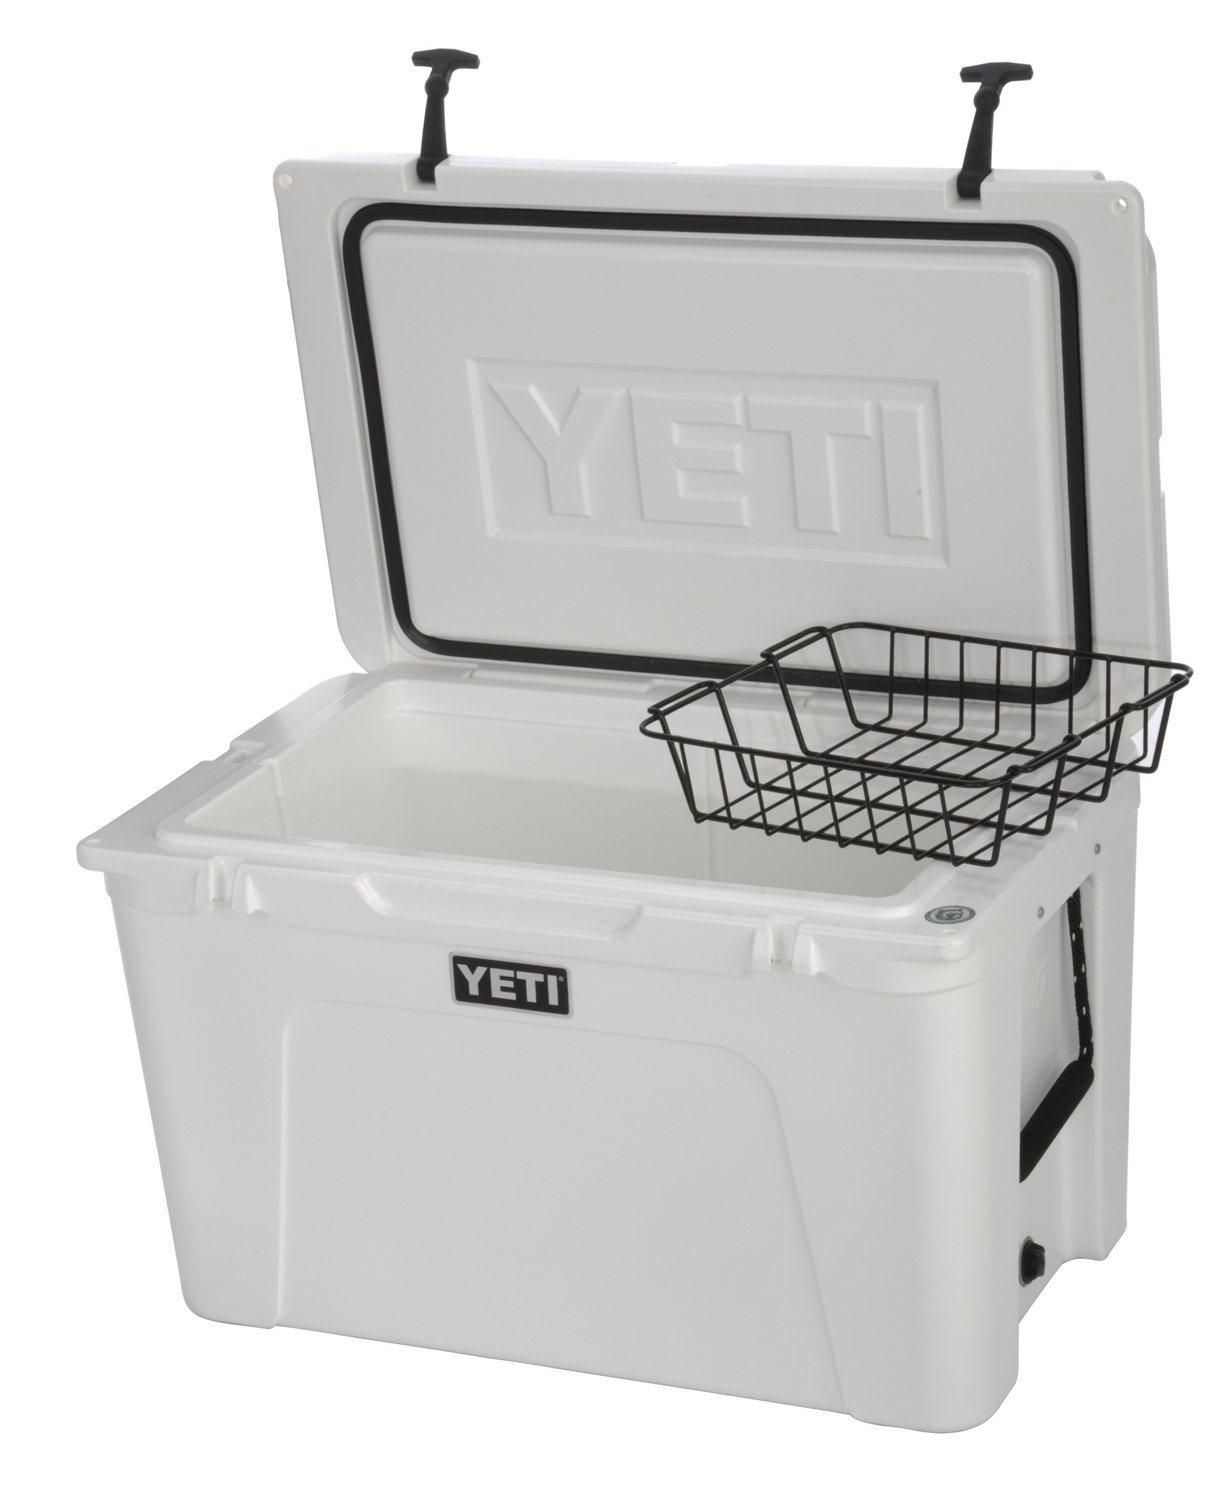 YETI Tundra 75 Cooler  Free Shipping at Academy